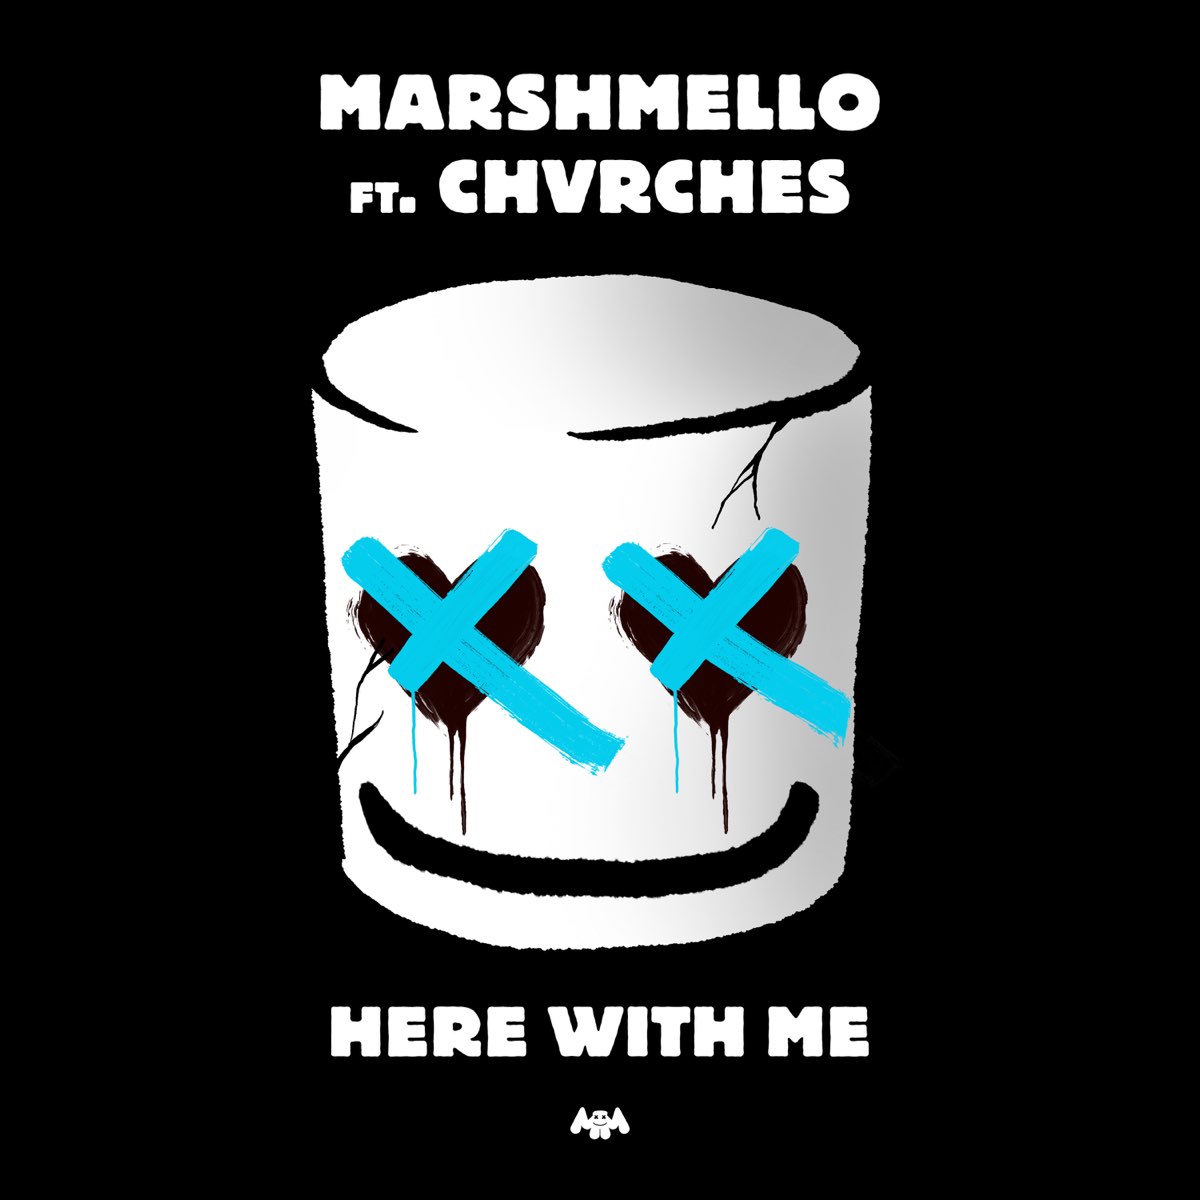 Marshmello / CHVRCHES - Here With Me Album Cover